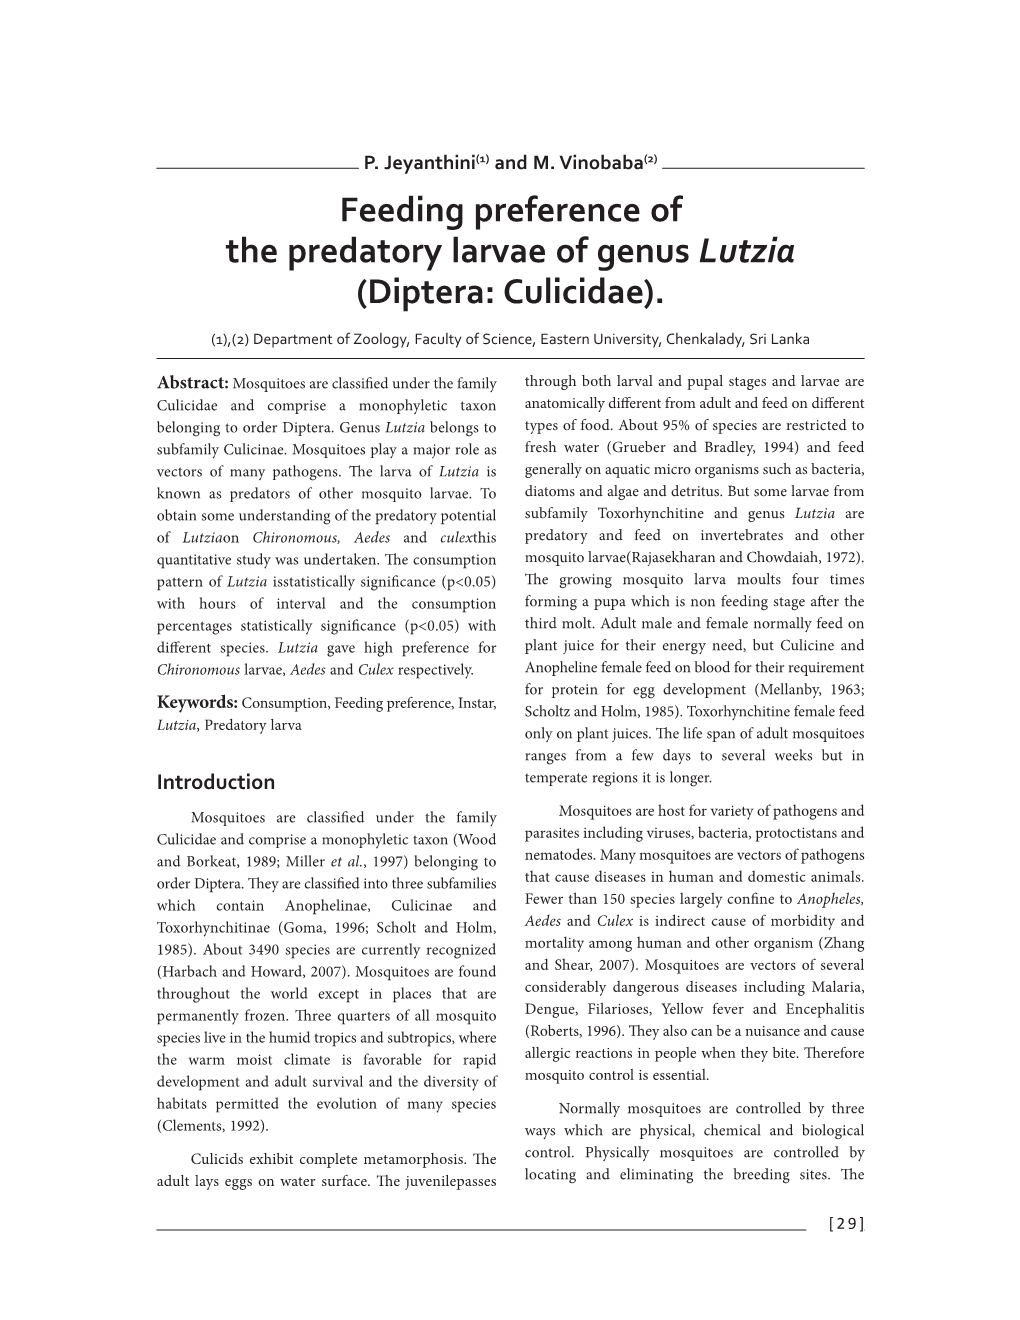 Feeding Preference of the Predatory Larvae of Genus Lutzia (Diptera: Culicidae)